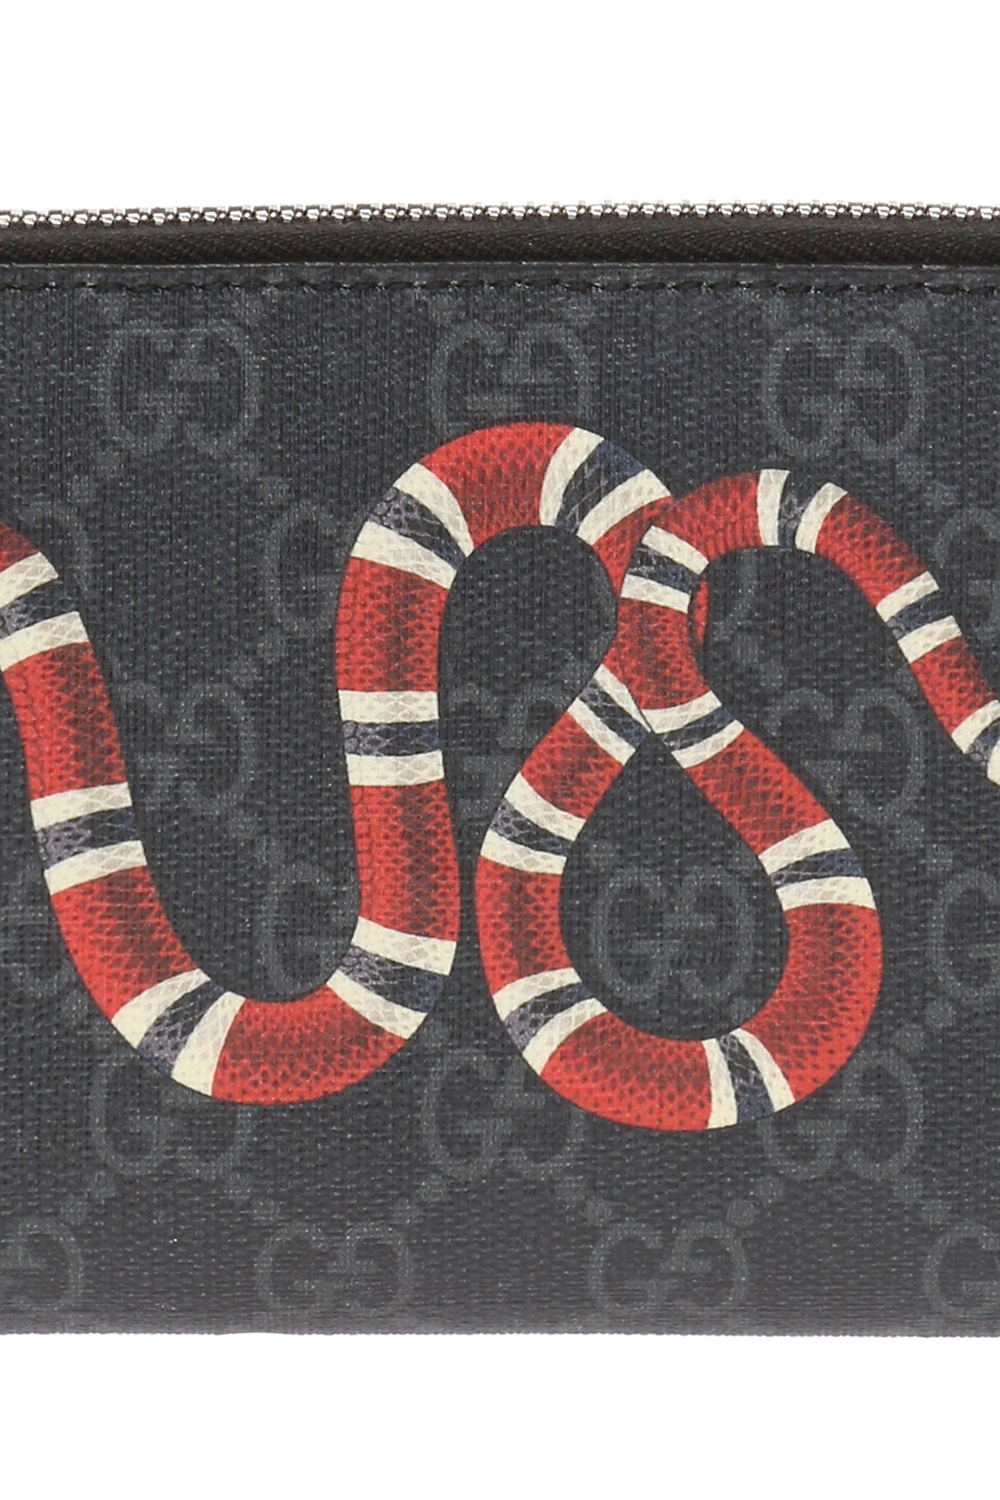 Grey Wallet with a snake motif Gucci - Vitkac TW